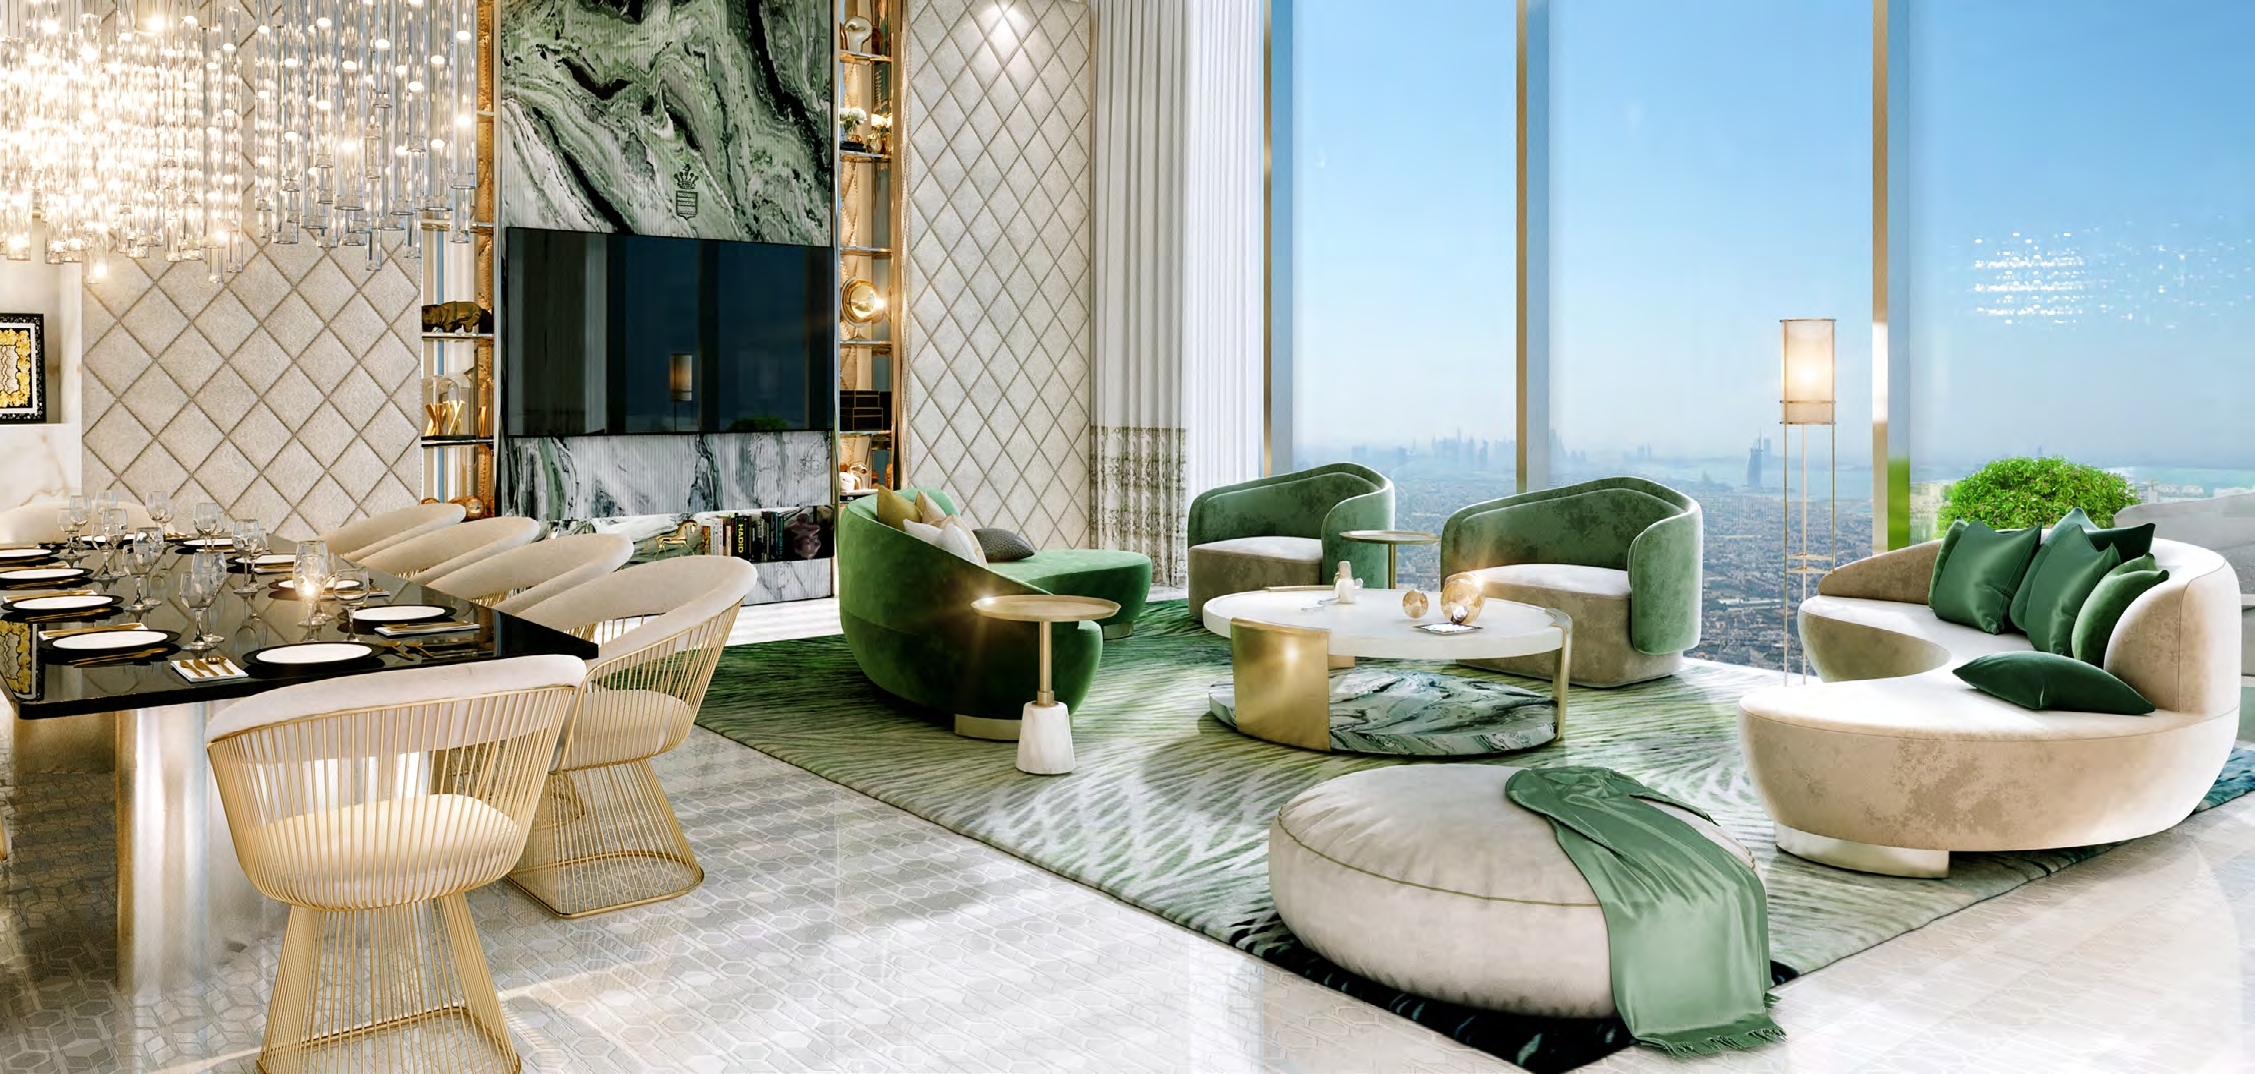 Luxury One-Bedroom Apartment in Dubai Slide Image 15